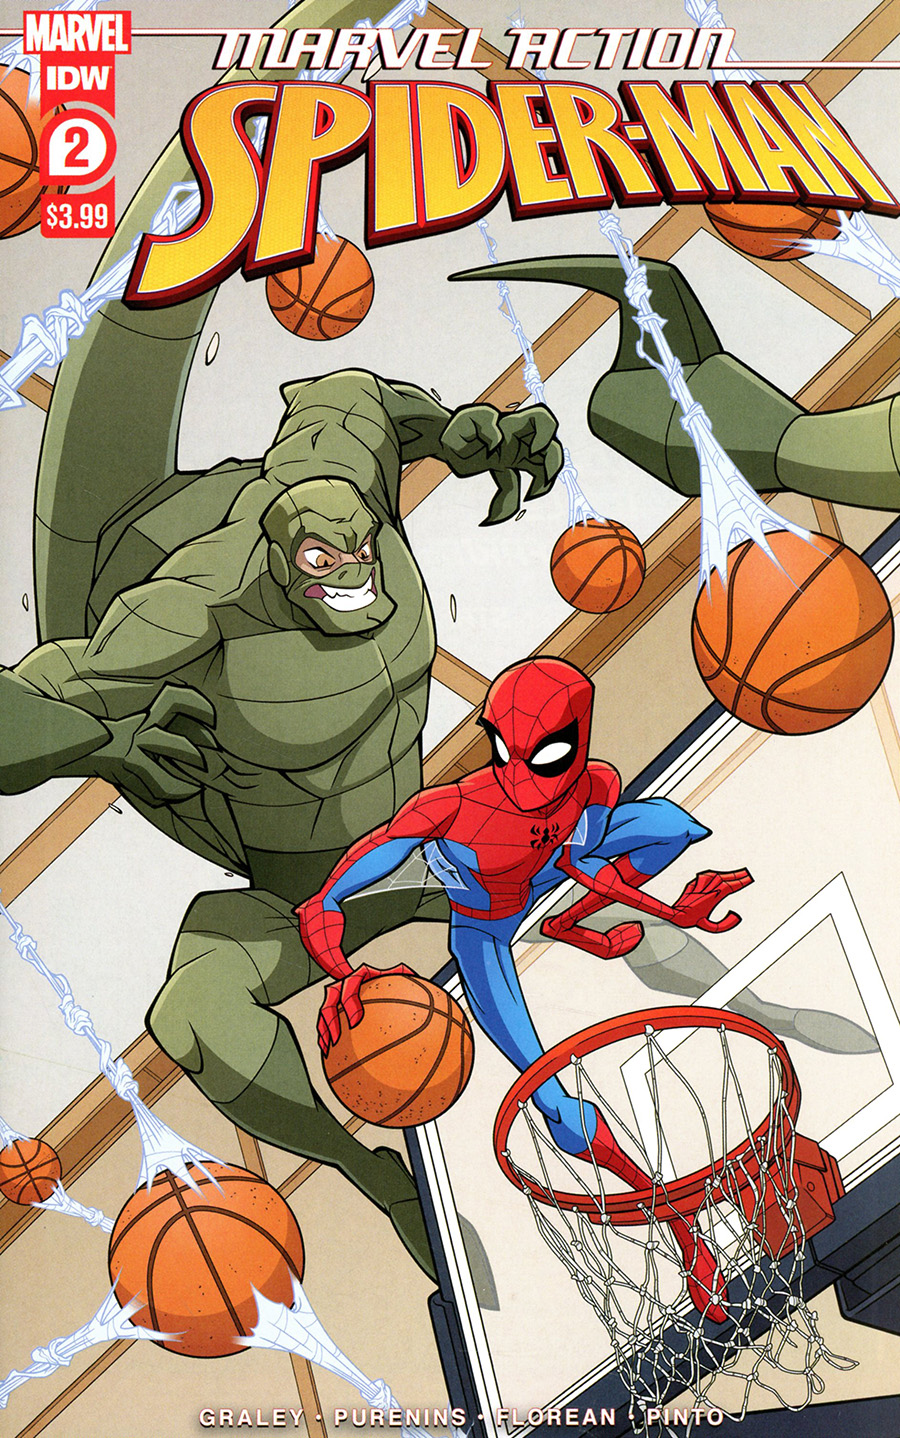 Marvel Action Spider-Man Vol 3 #2 Cover A Regular Arianna Florean Cover